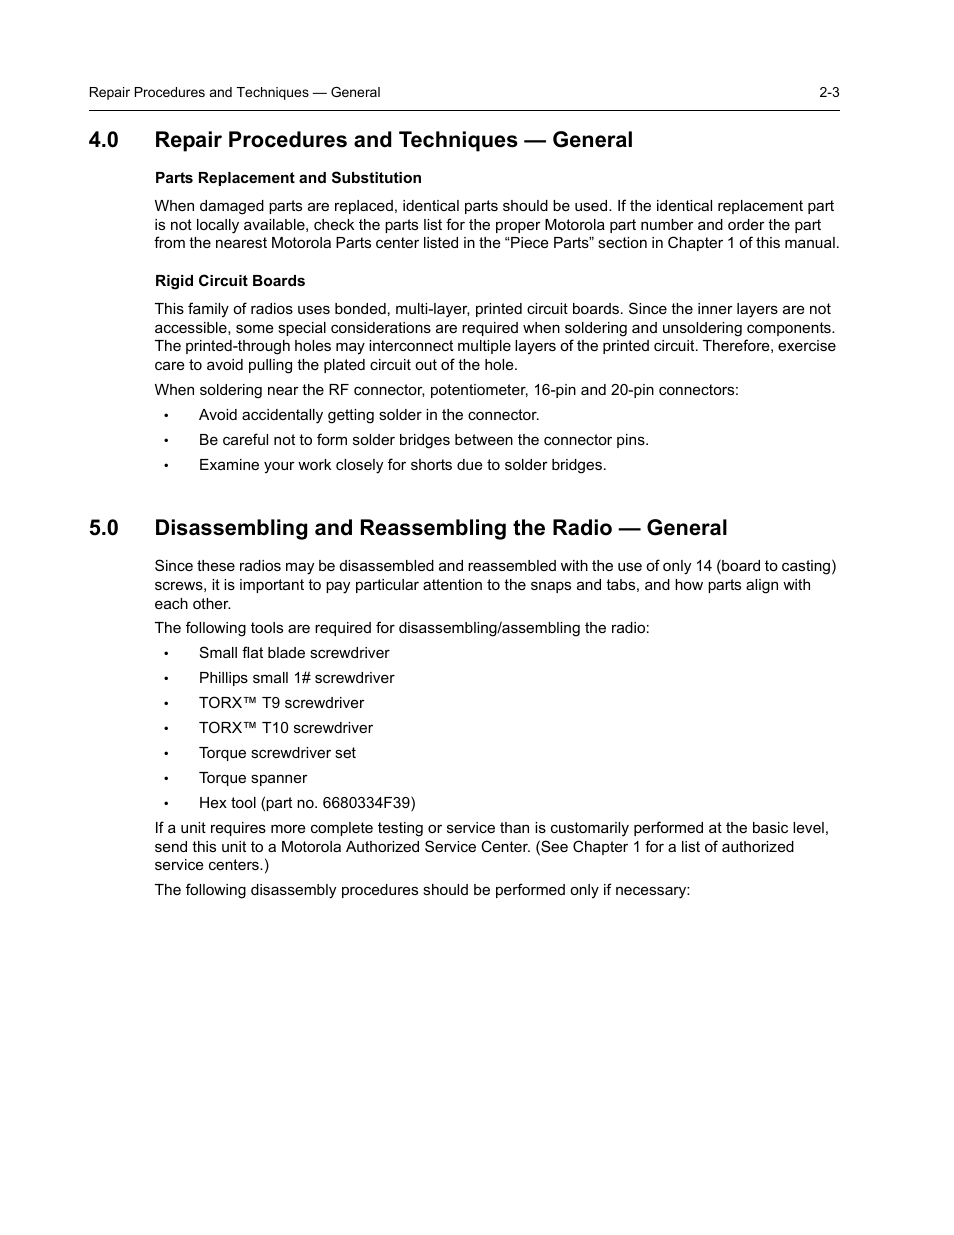 0 repair procedures and techniques — general | Nikon RADIUS CM200 User Manual | Page 17 / 70